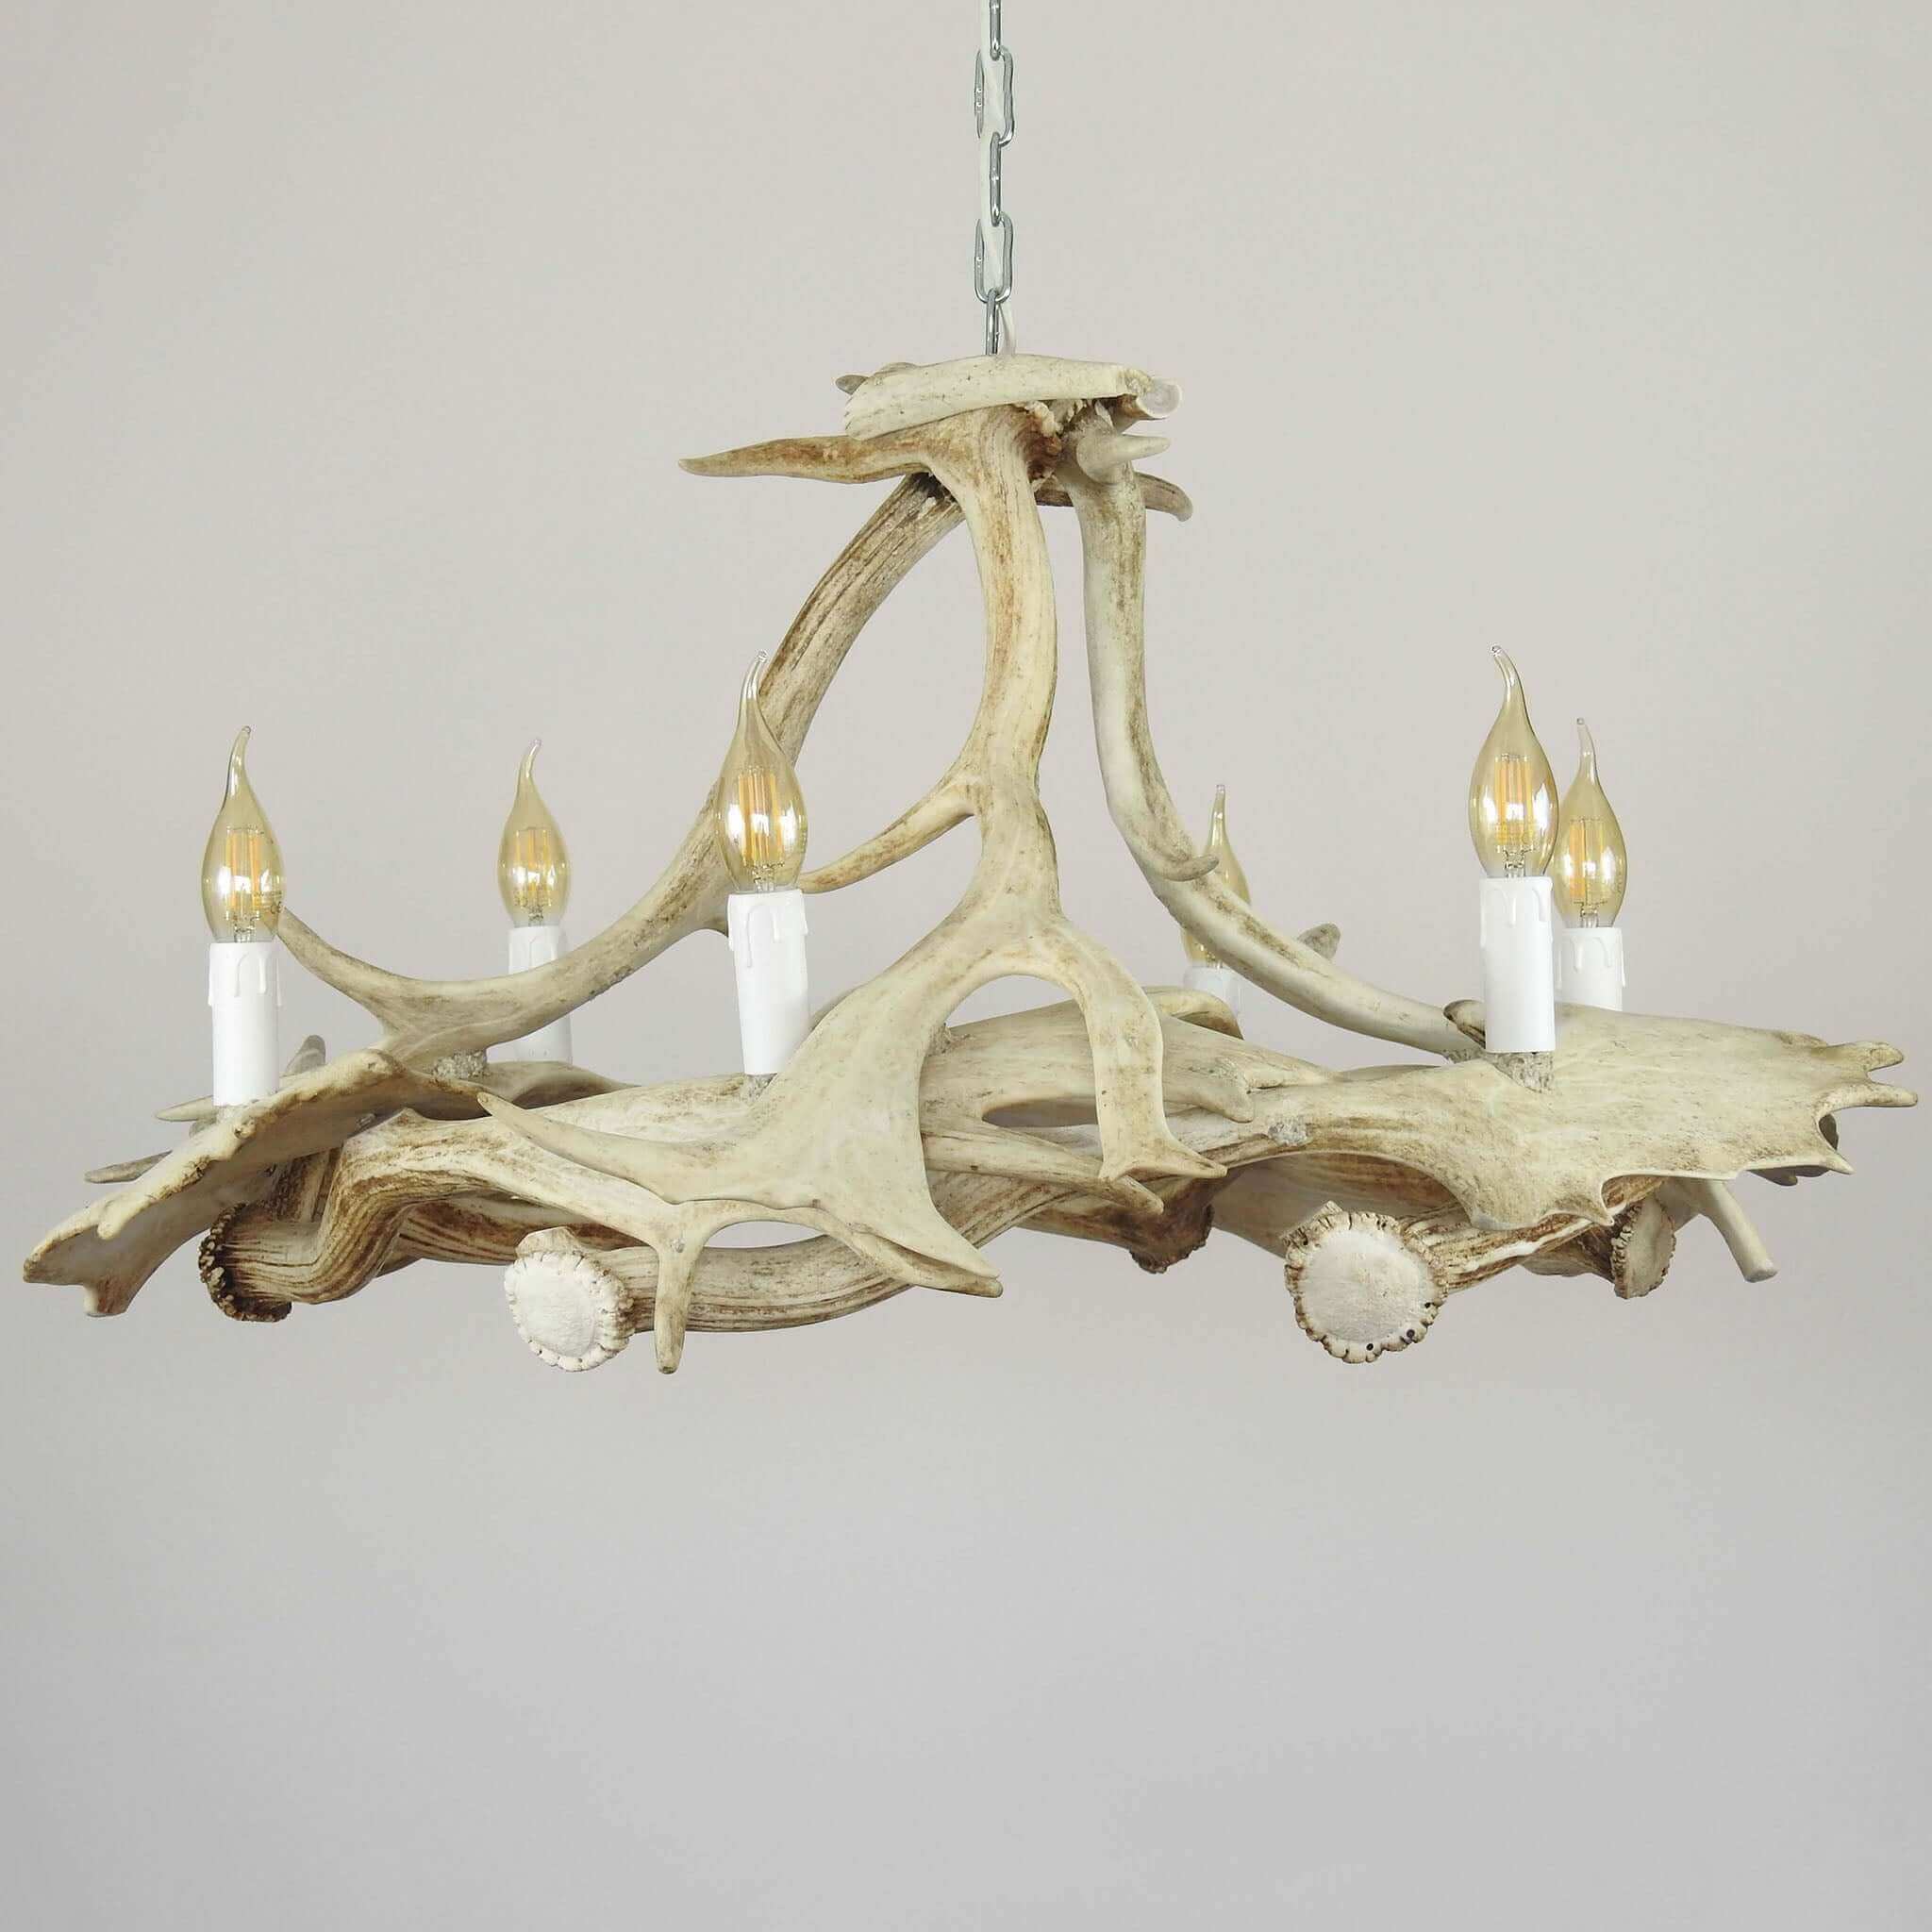 Antler chandelier made of fallow deer antlers.